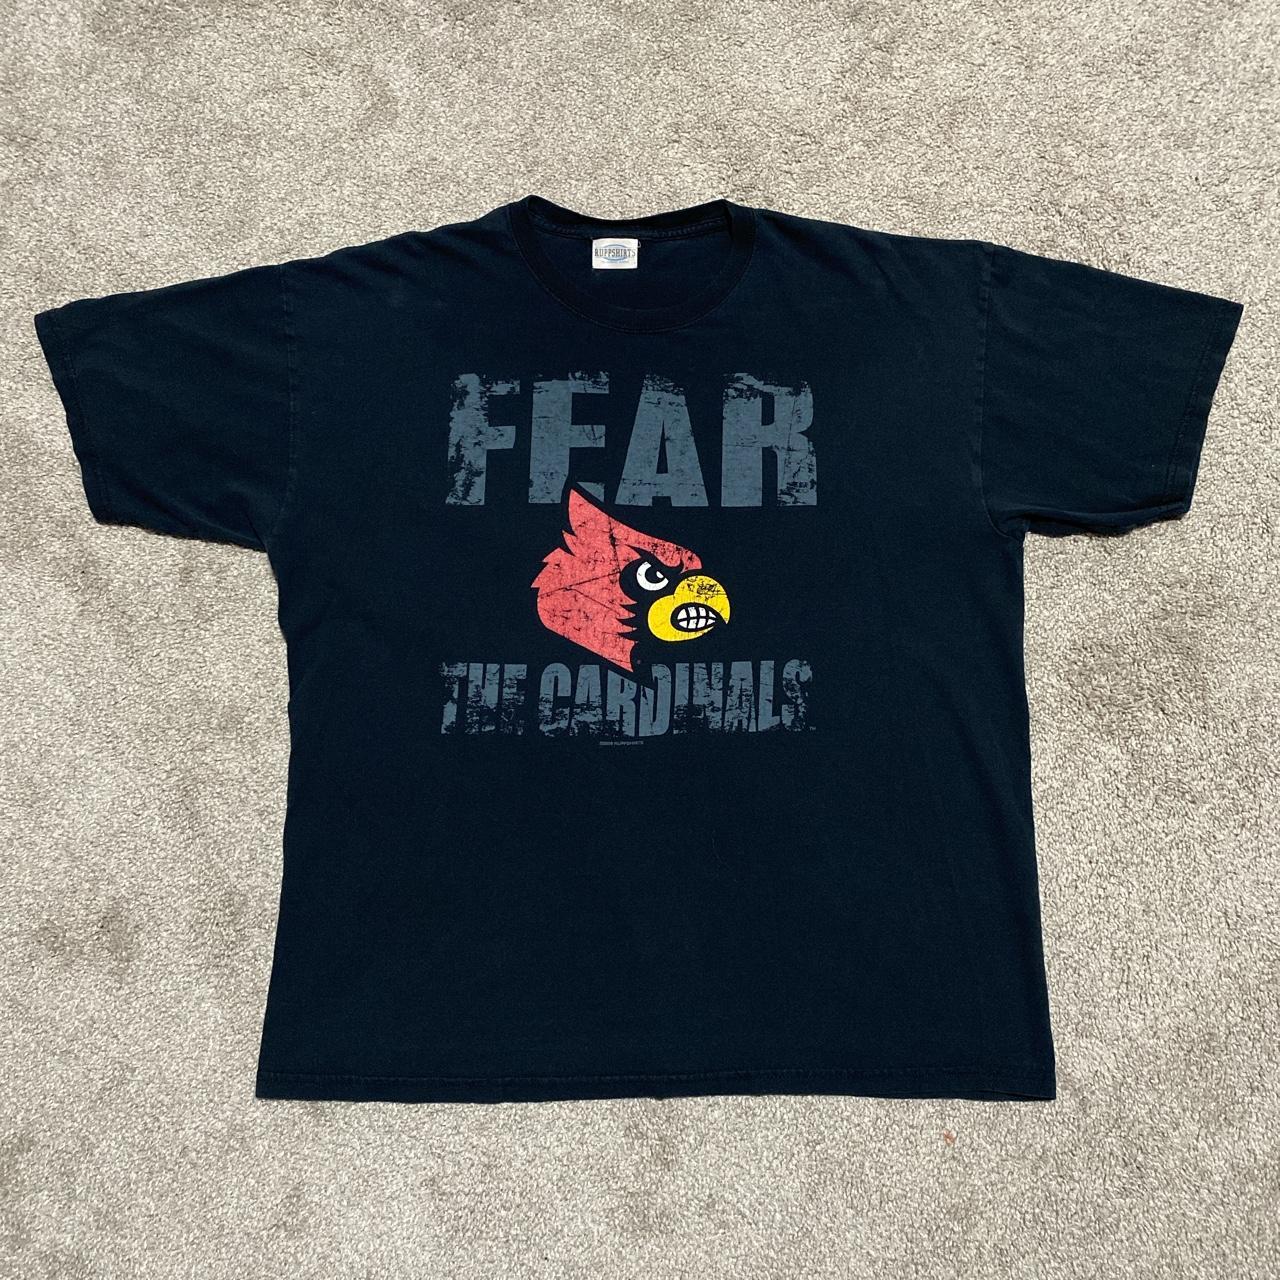 Vintage University of Louisville Cardinals tshirt. - Depop